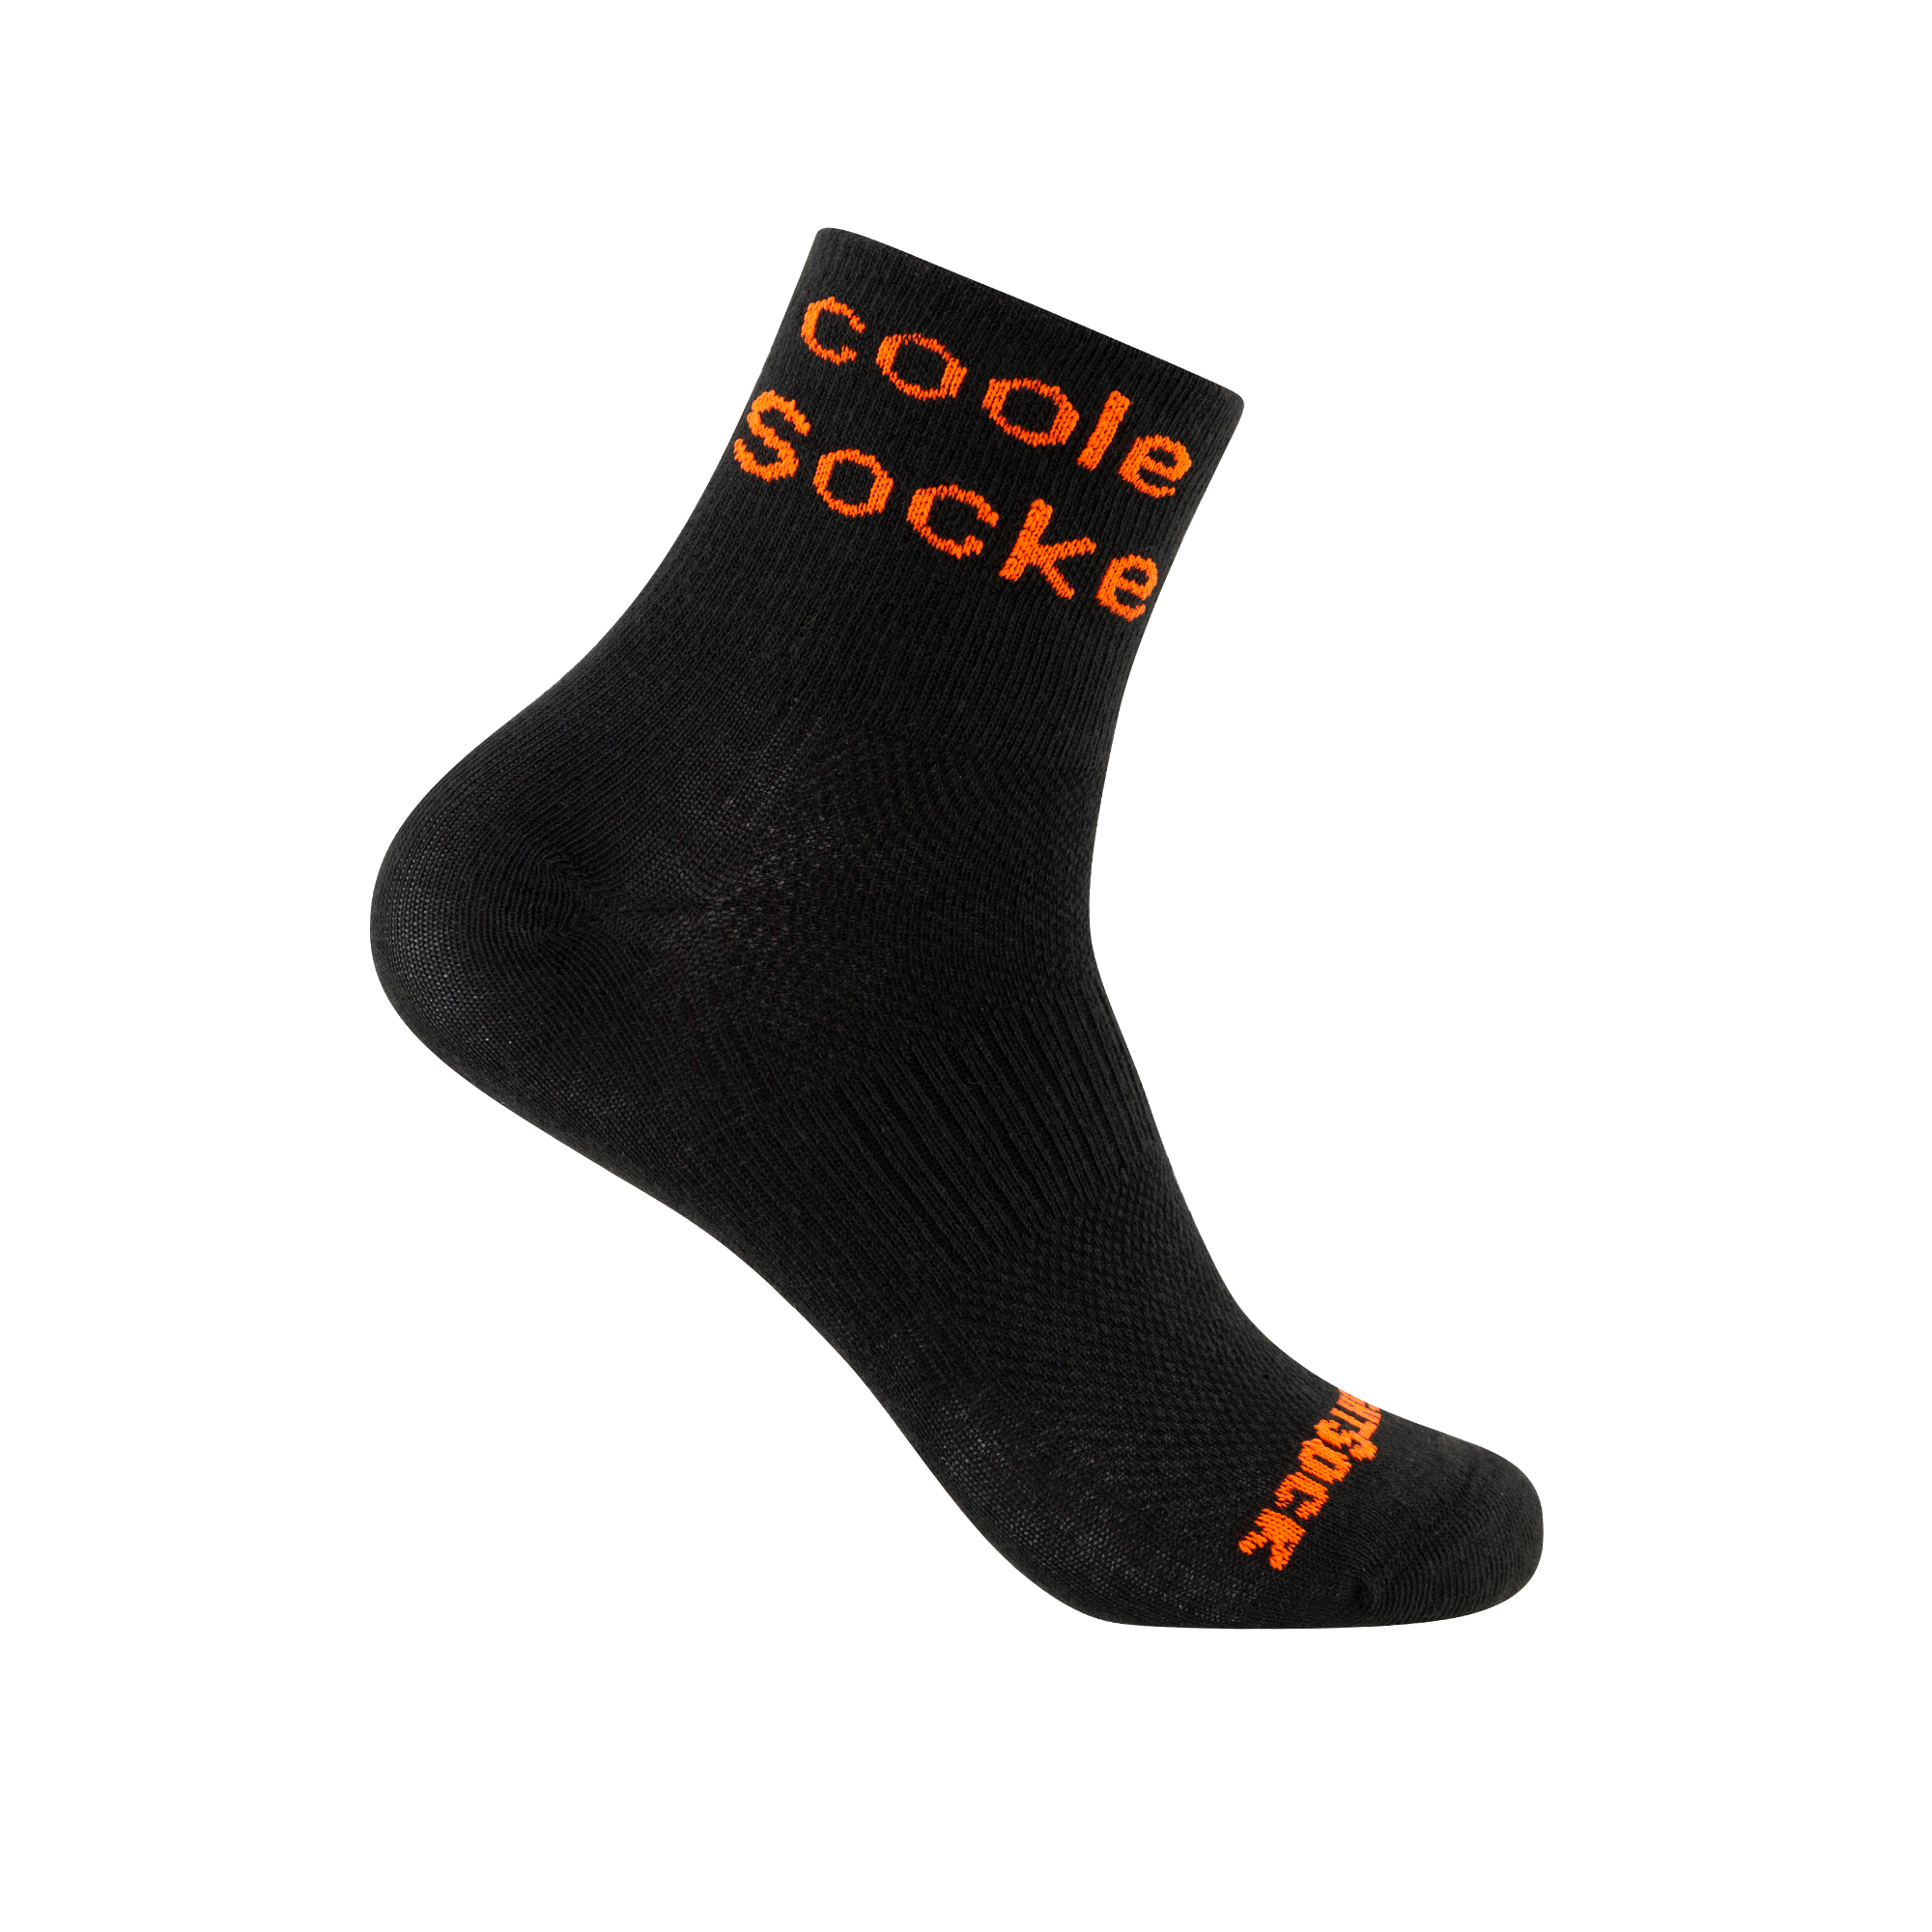 #farbe_black / Coole Socke WRIGHTSOCK doppellagige Anti-Blasen-Socken Marathon Ultralauf Running Laufen Laufsocken